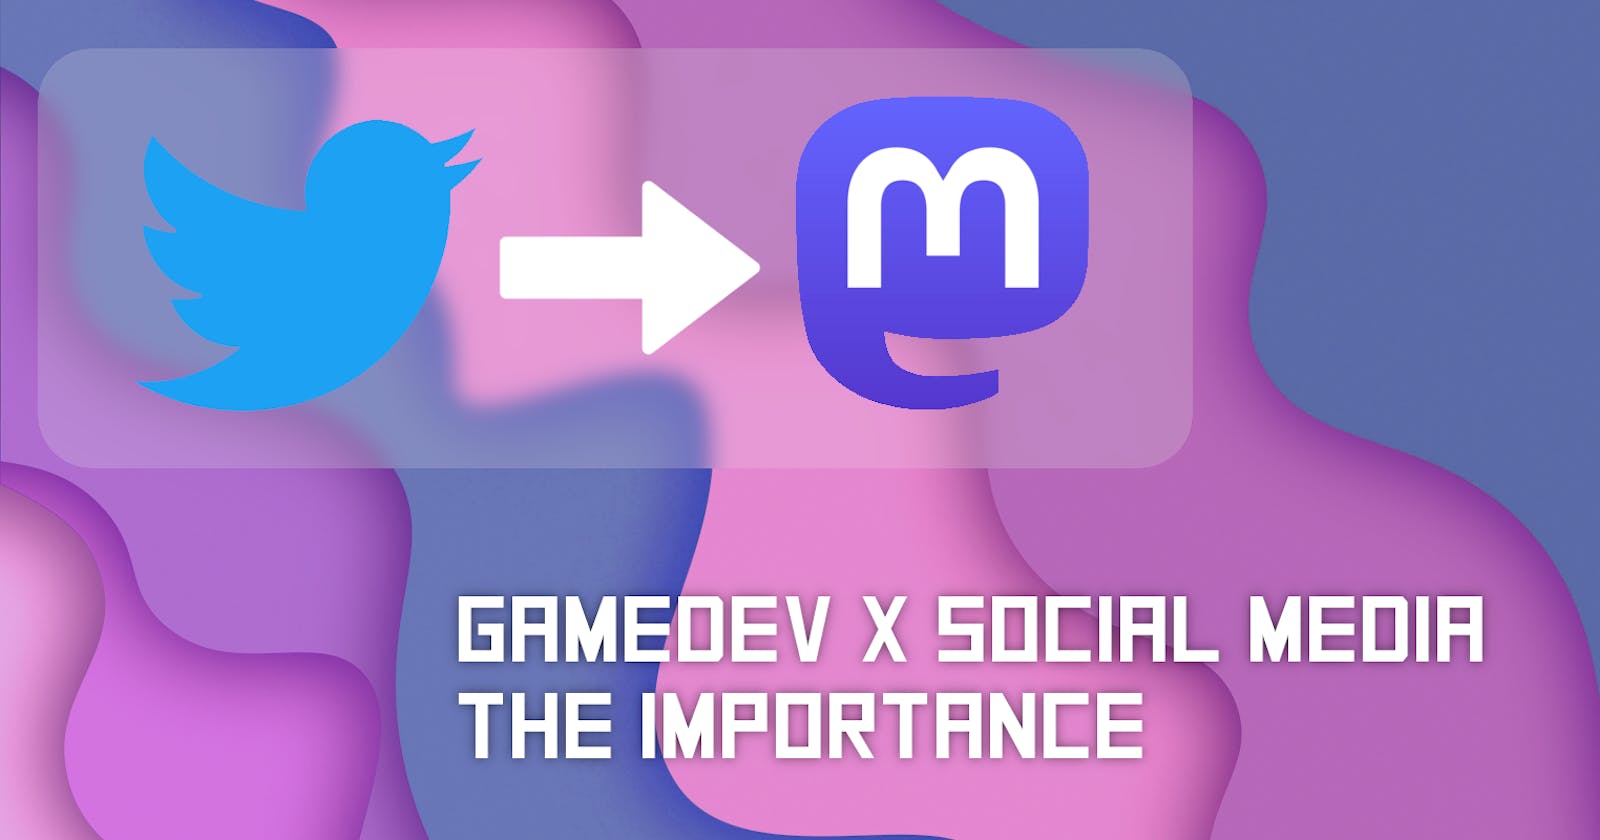 GameDev x Social Media: The Importance